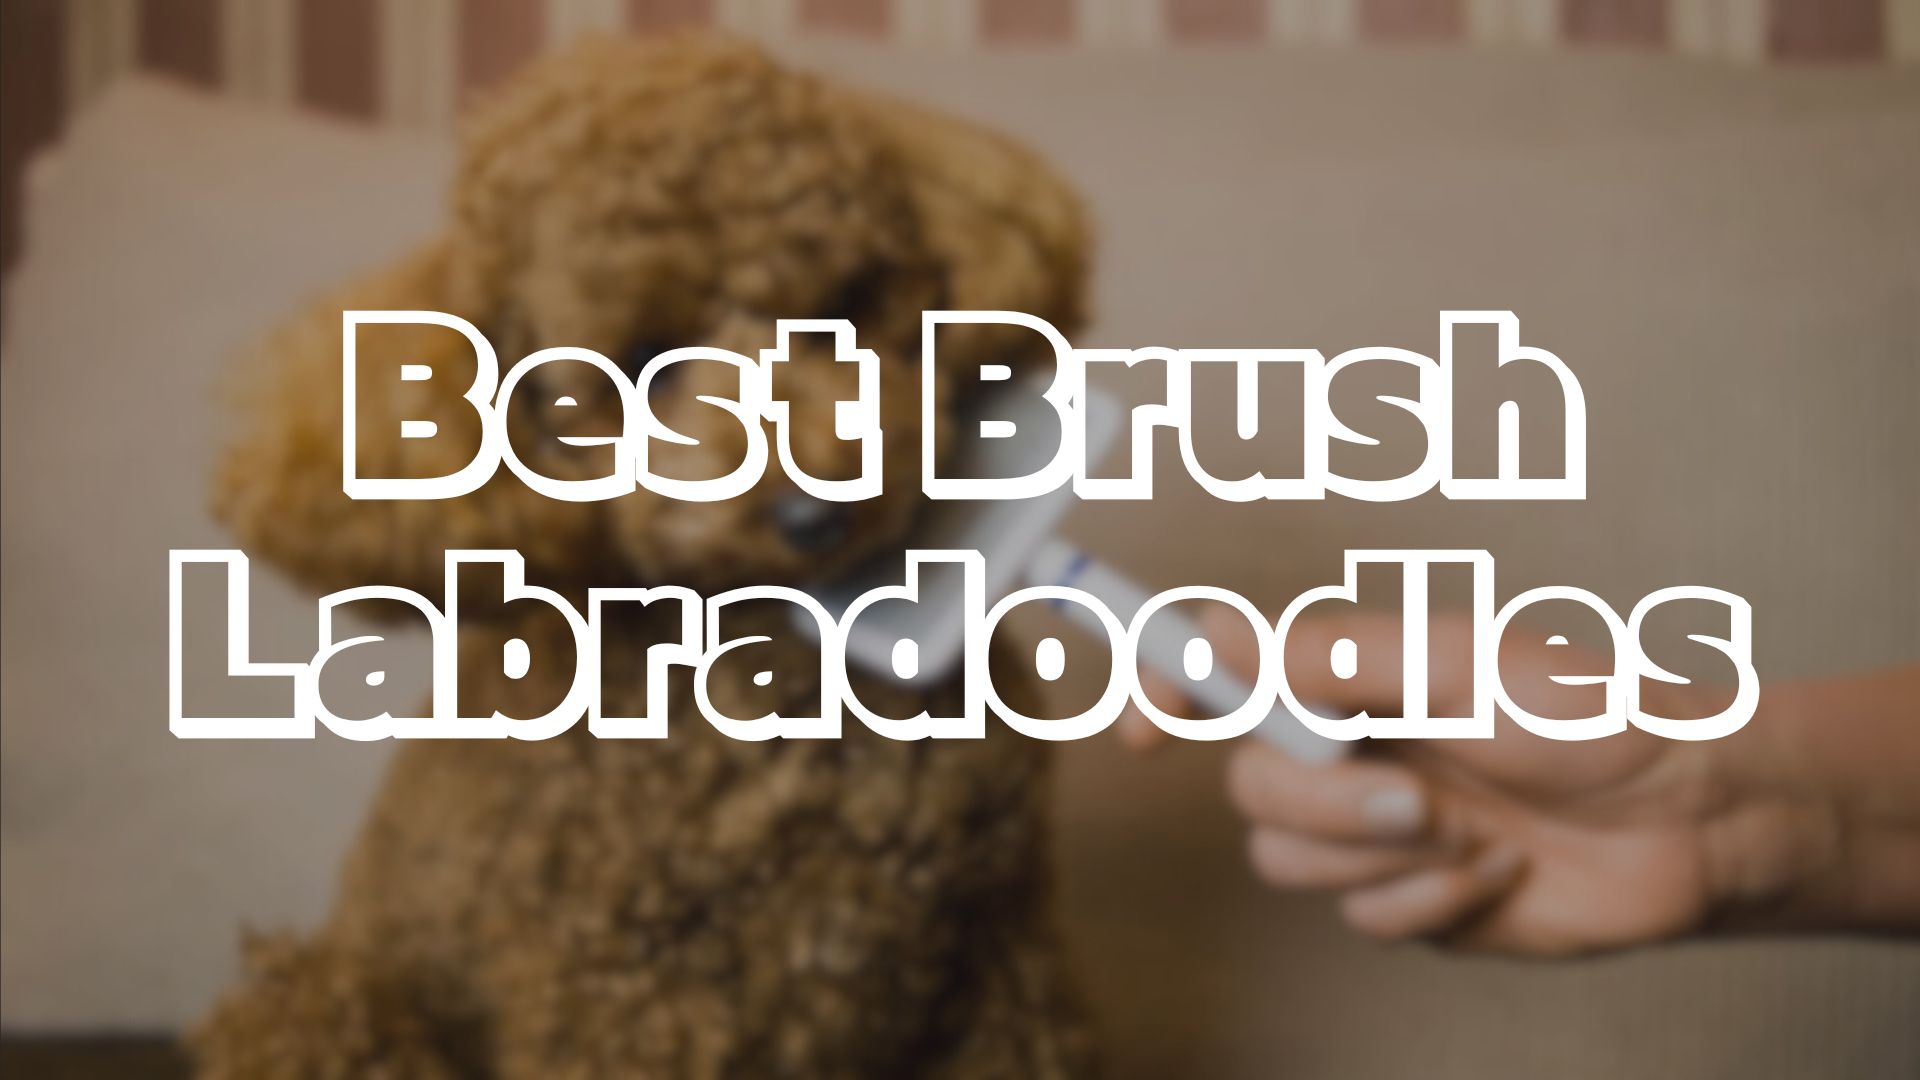 Best Brush Labradoodles